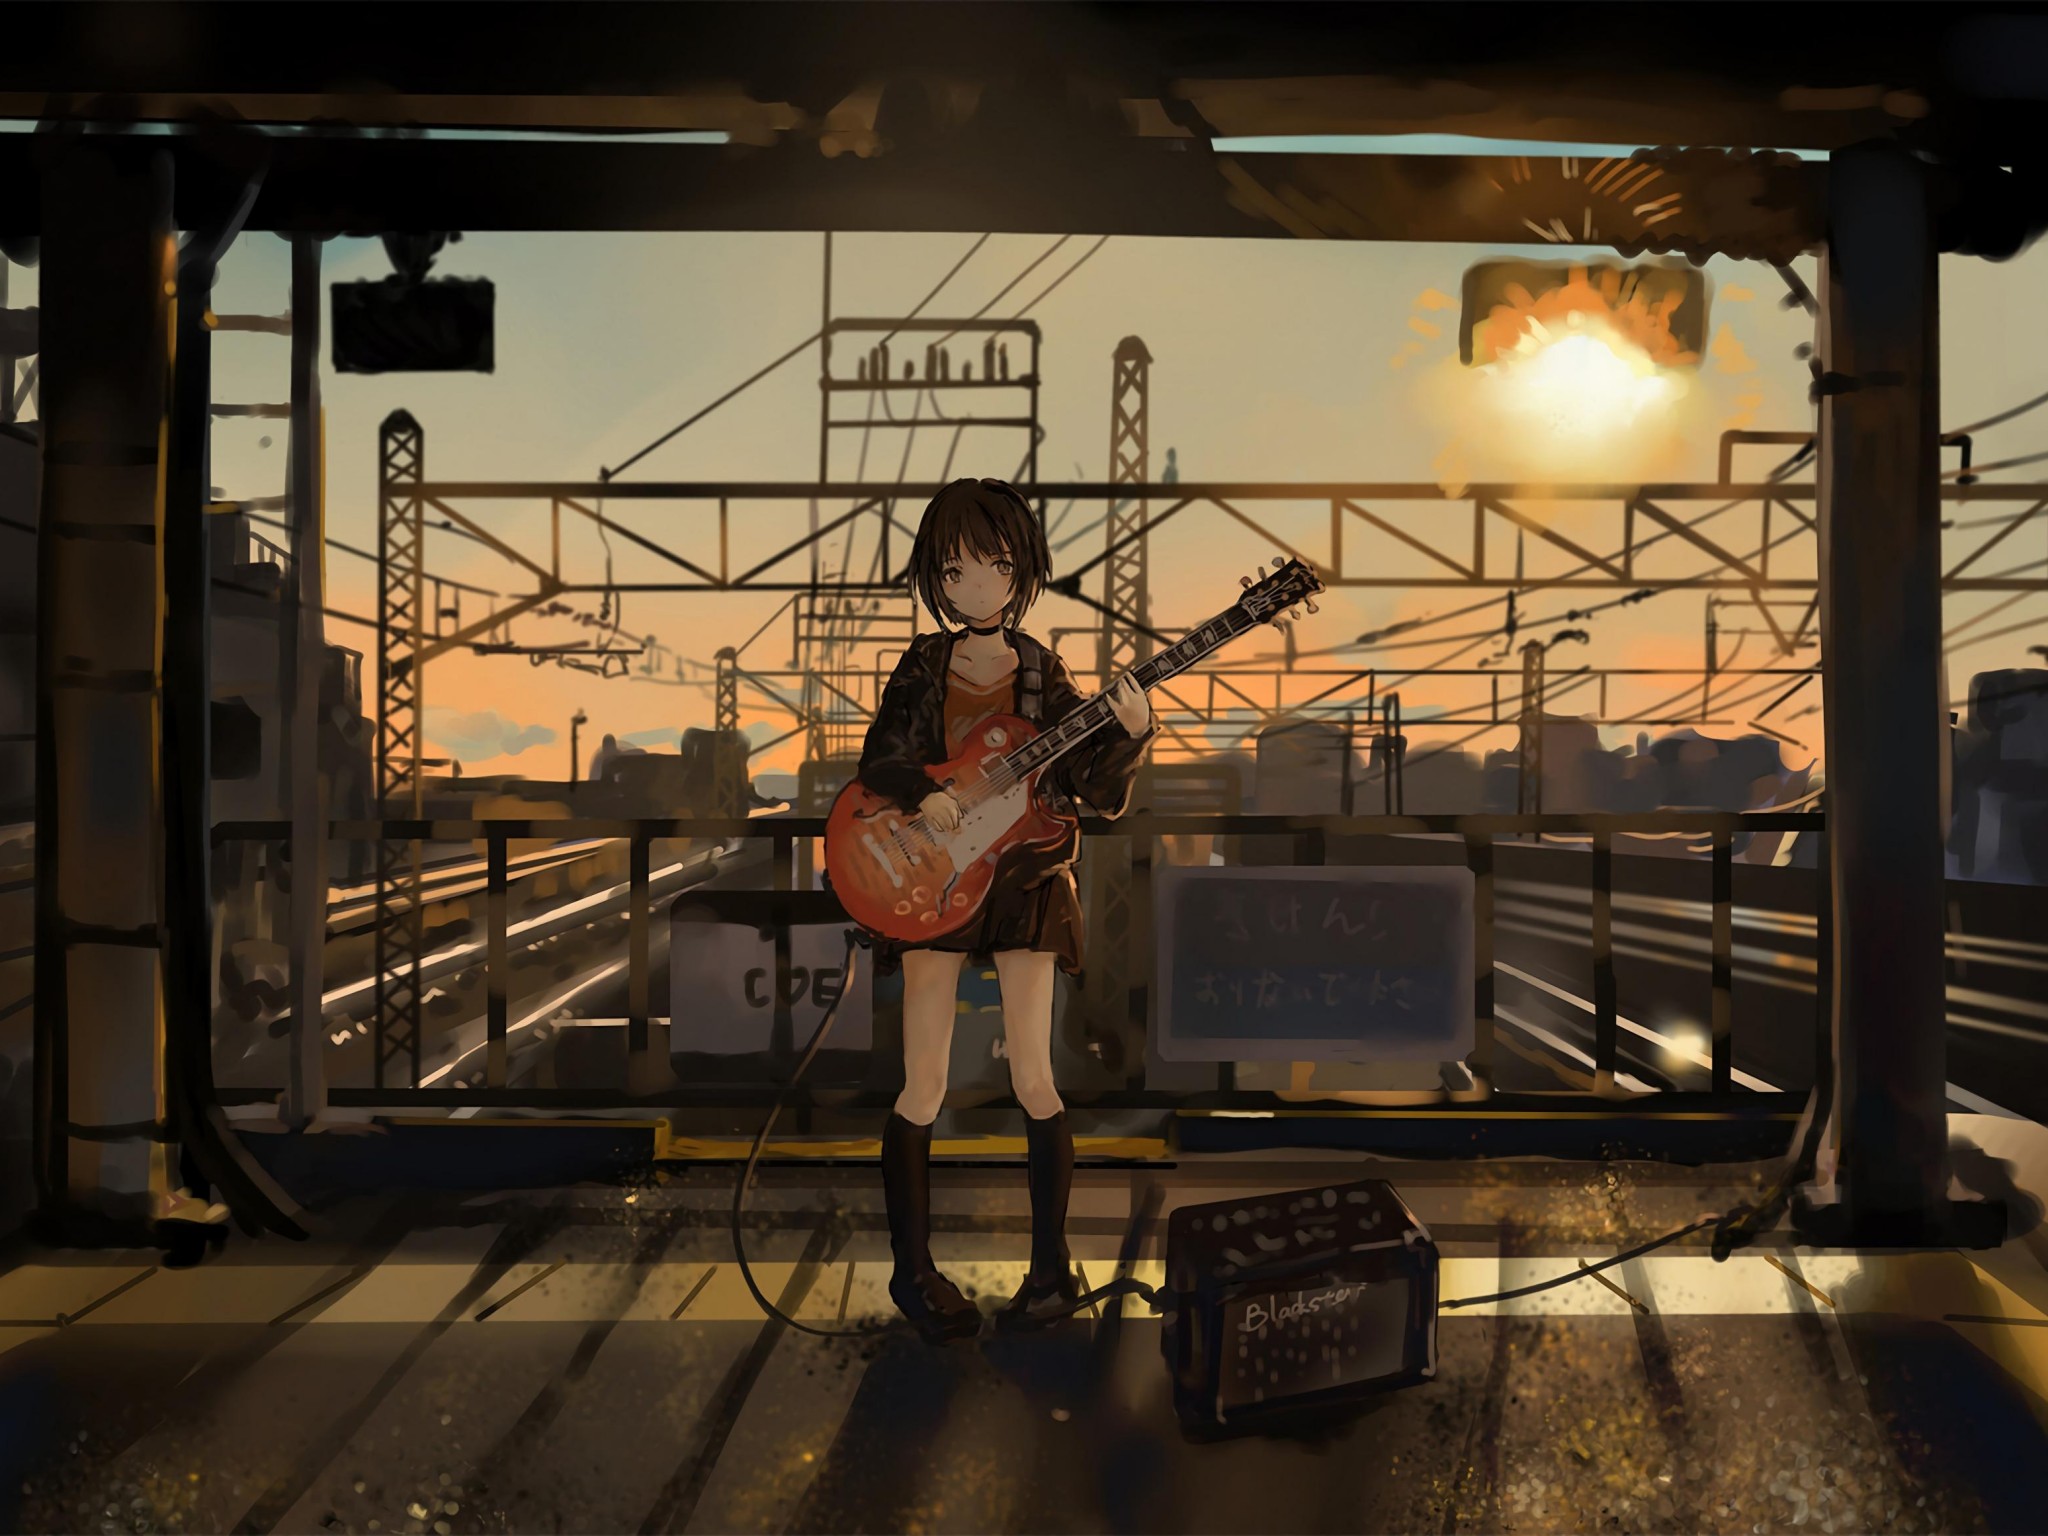 Anime Girl With Guitar Art - HD Wallpaper 